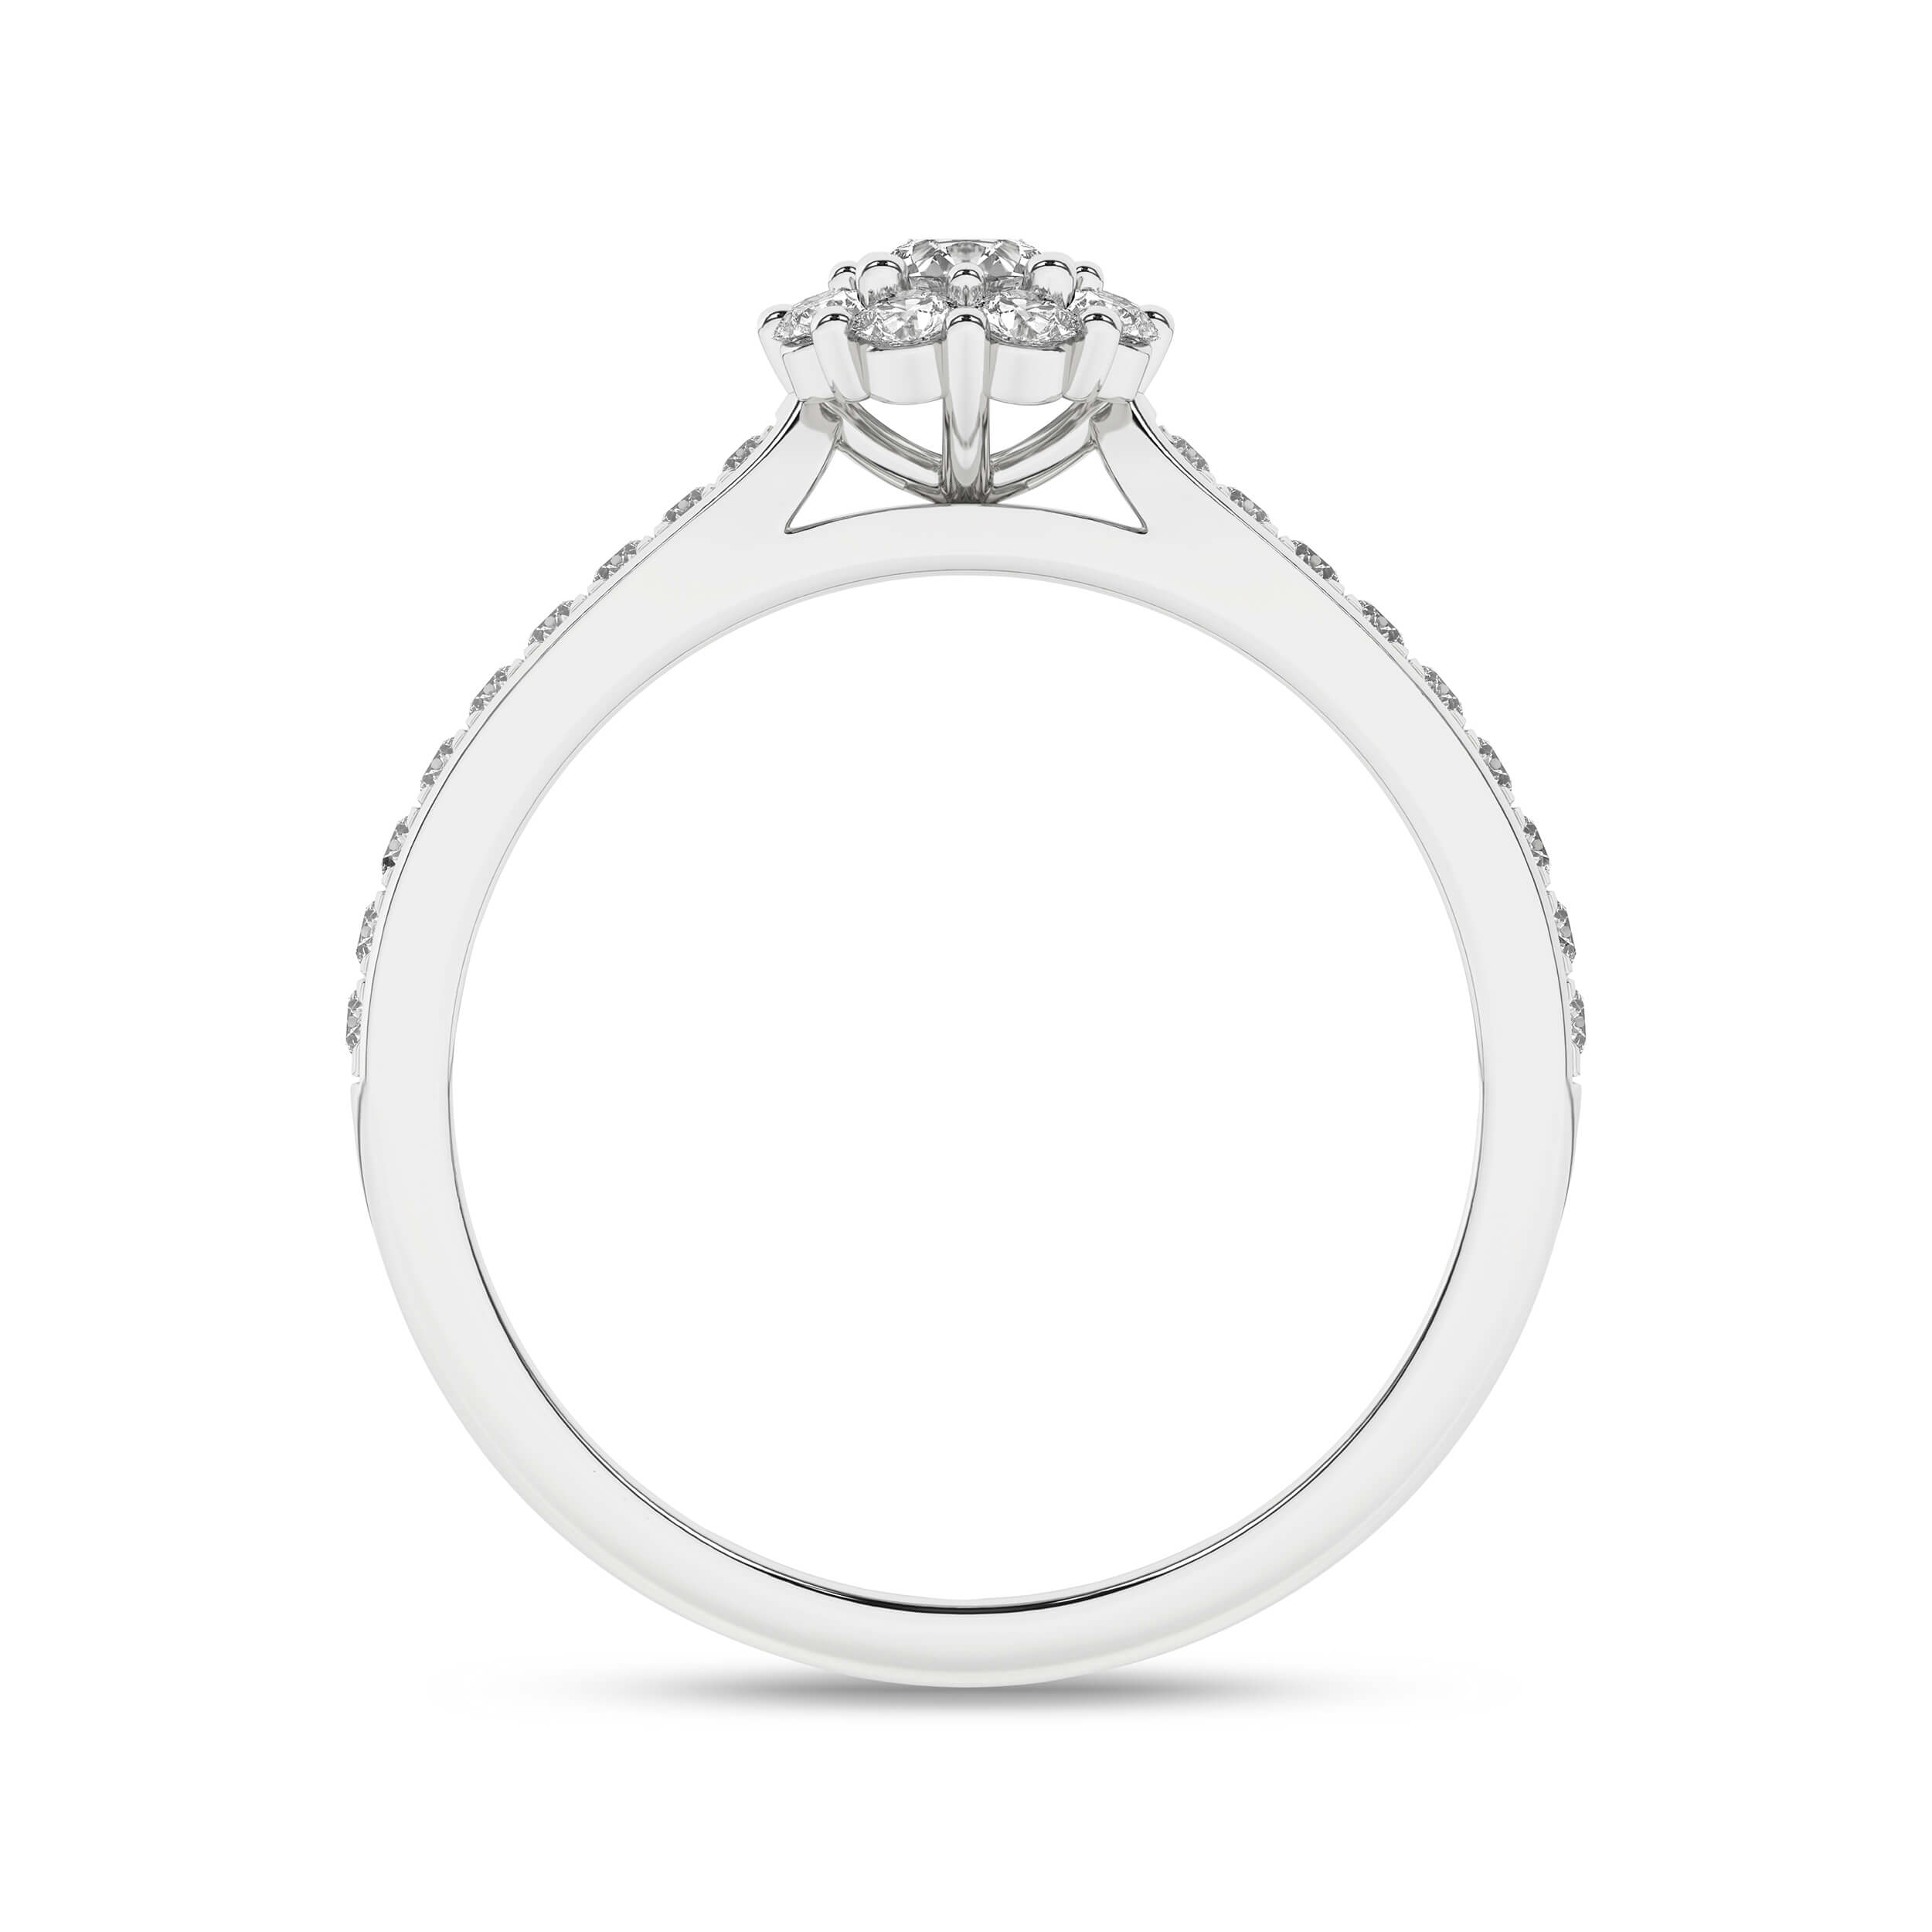 Inel de logodna din Aur Alb 18K cu Diamante 0.50Ct, articol RB9688EG, previzualizare foto 3